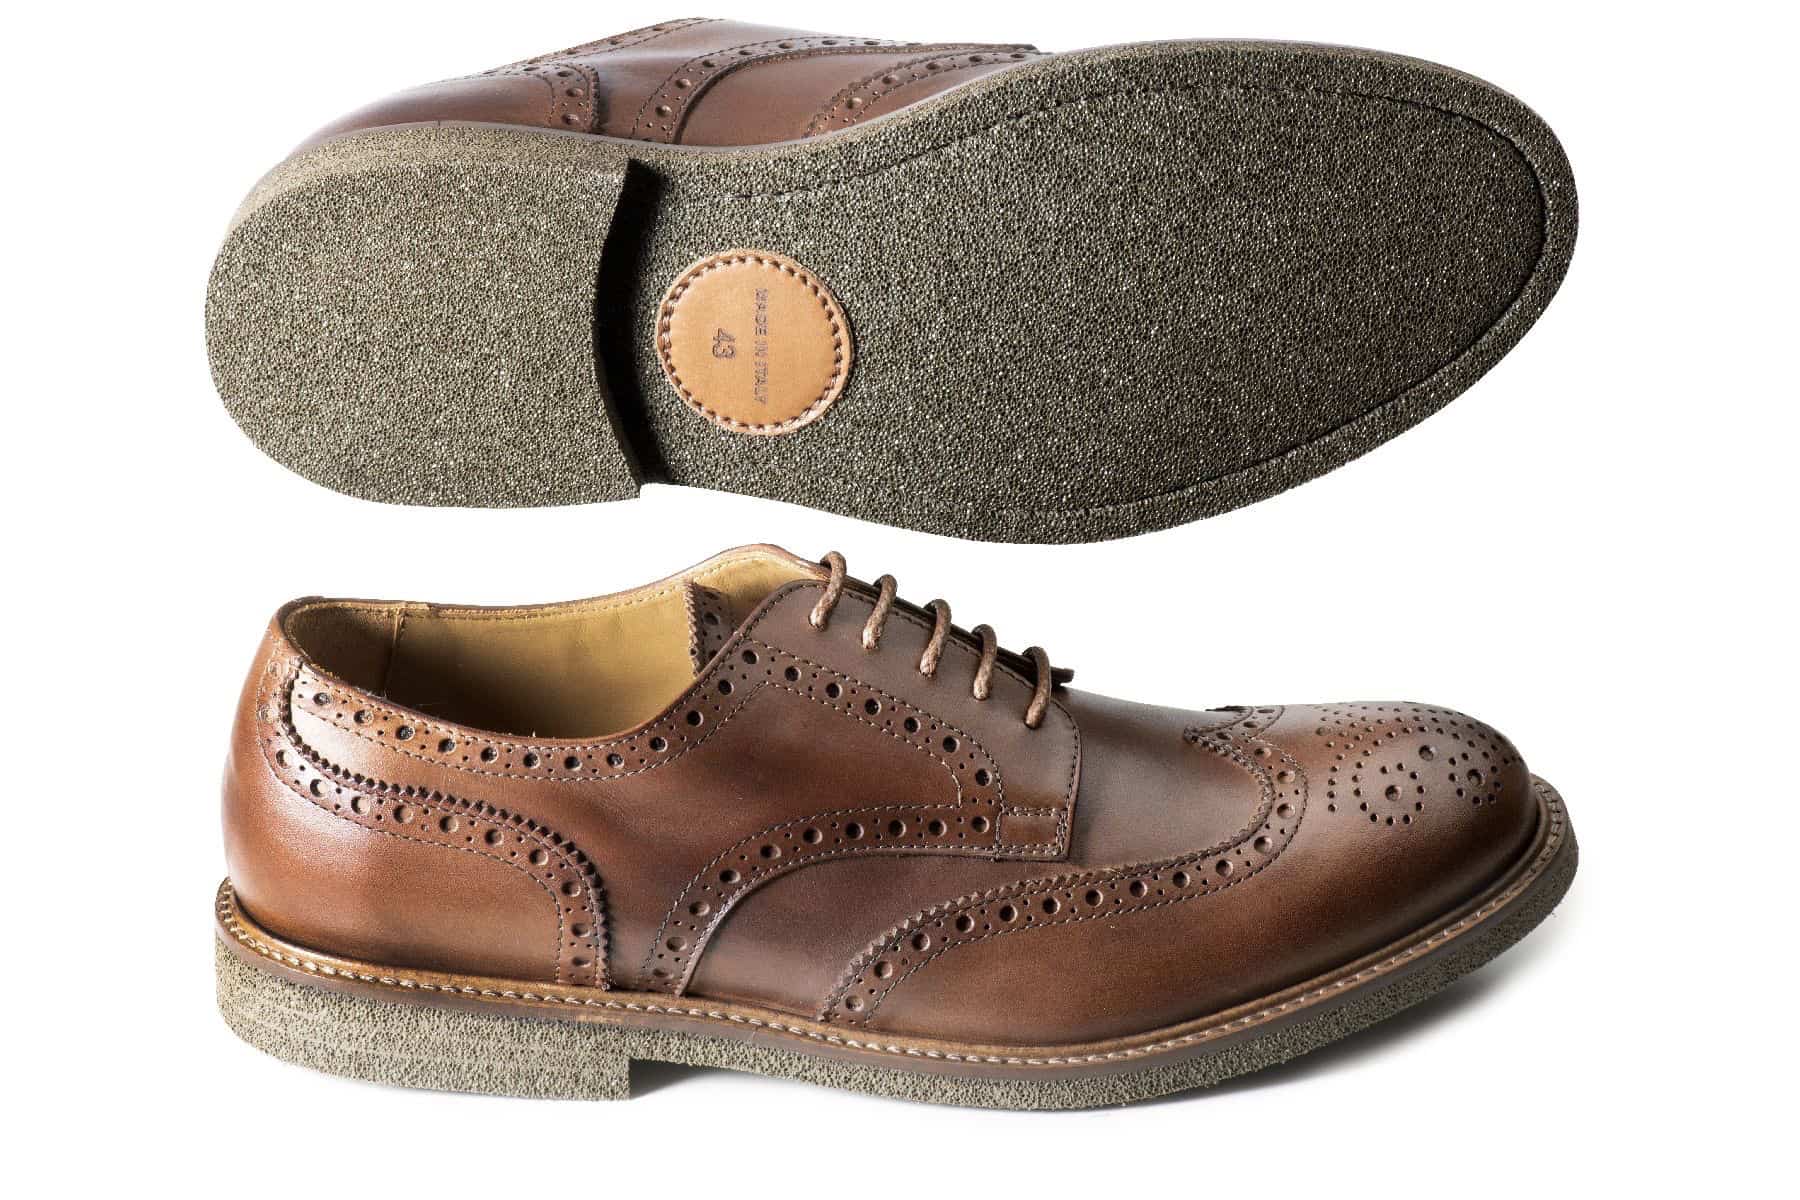 Men's English style Oxford tobacco shoe